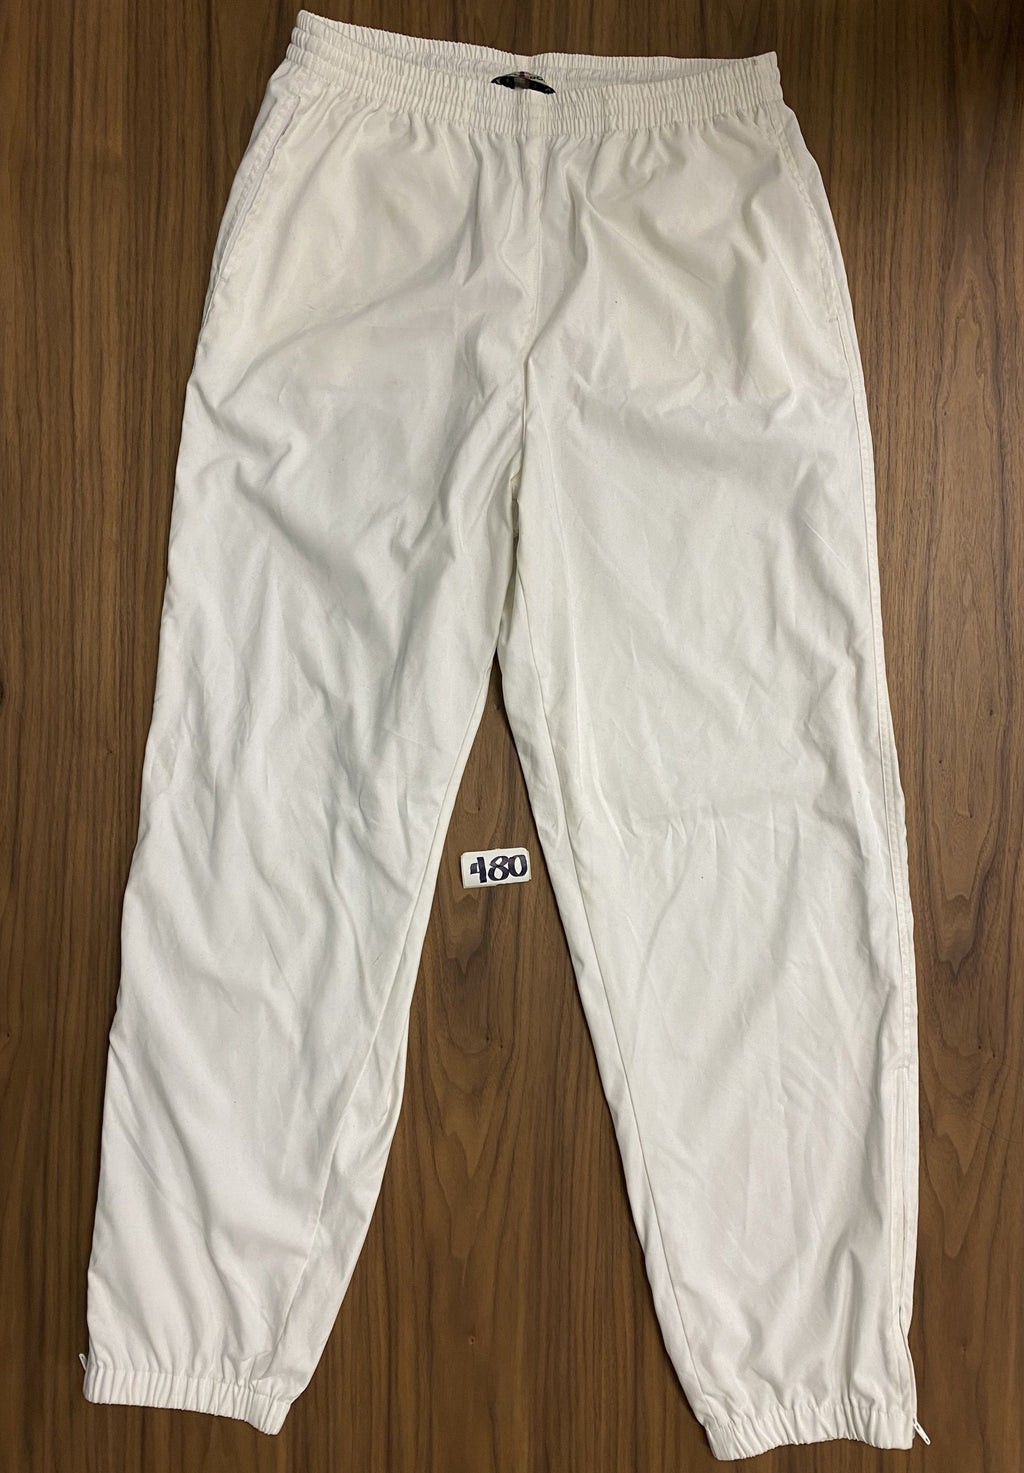 Polo Sport Ralph Lauren Warm Up Pants - White